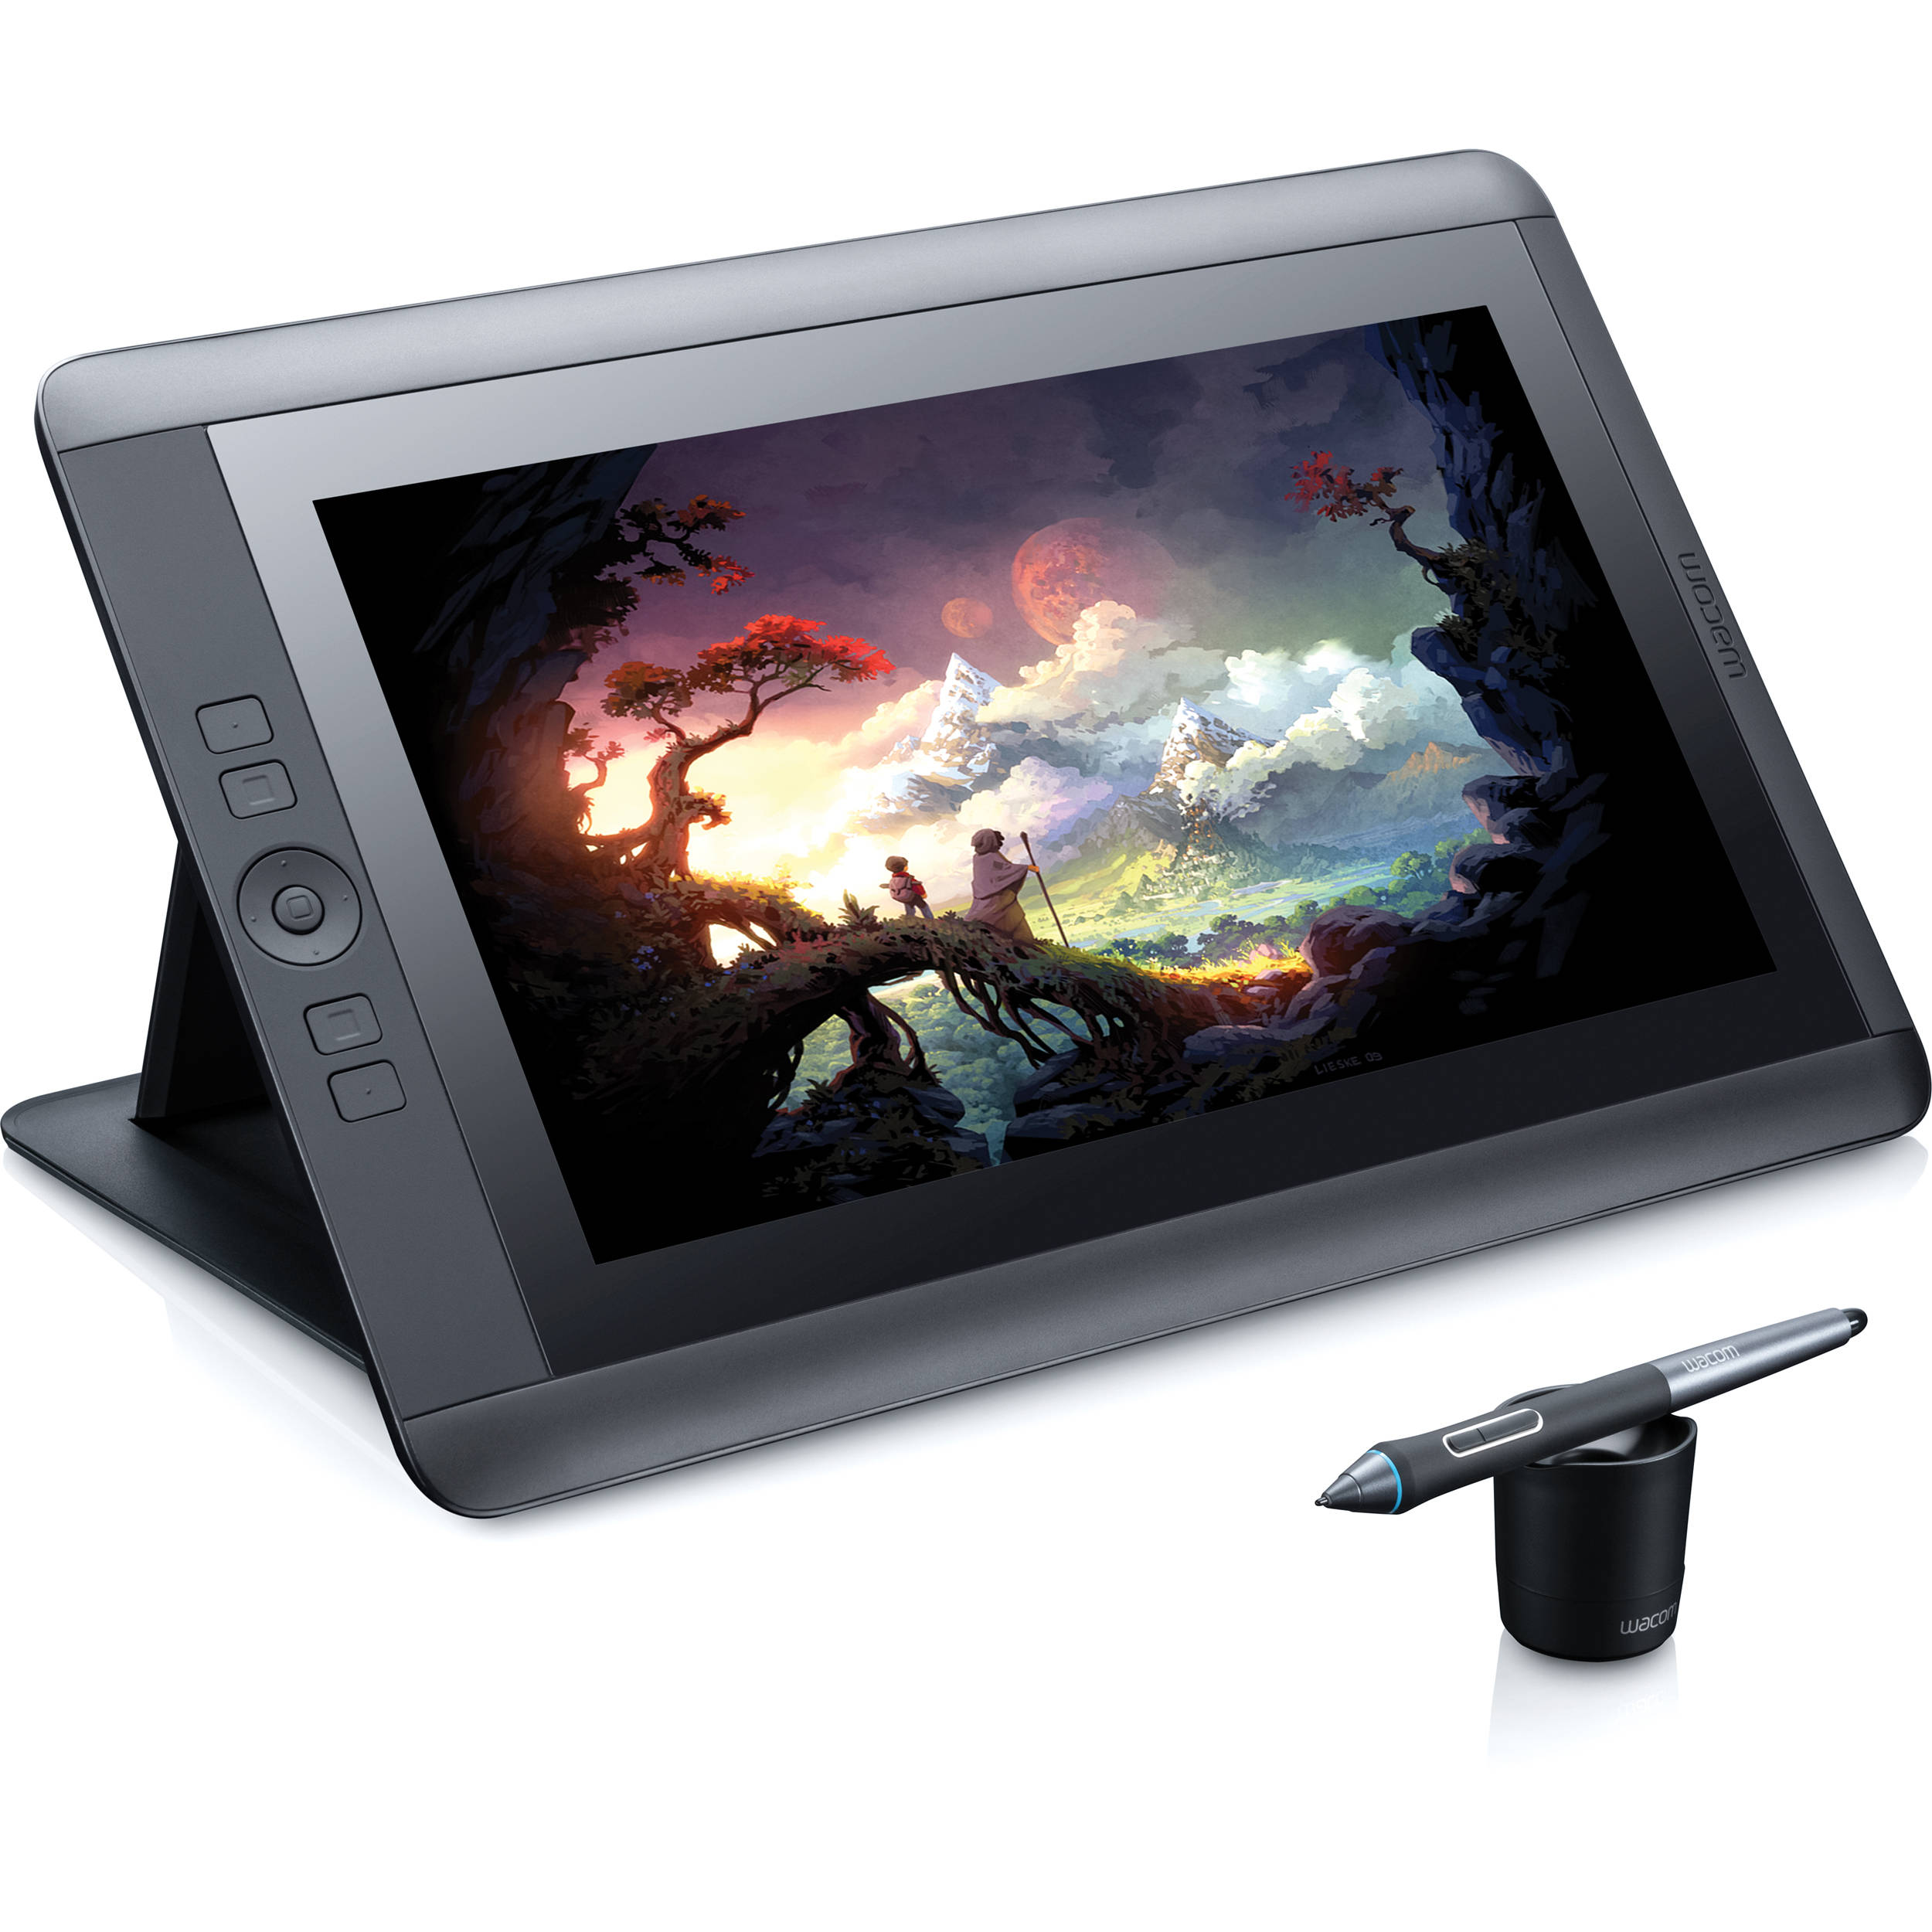 Grupo Deco comercializa al mejor precio tu monitor interactivo Cintiq 13HD - México